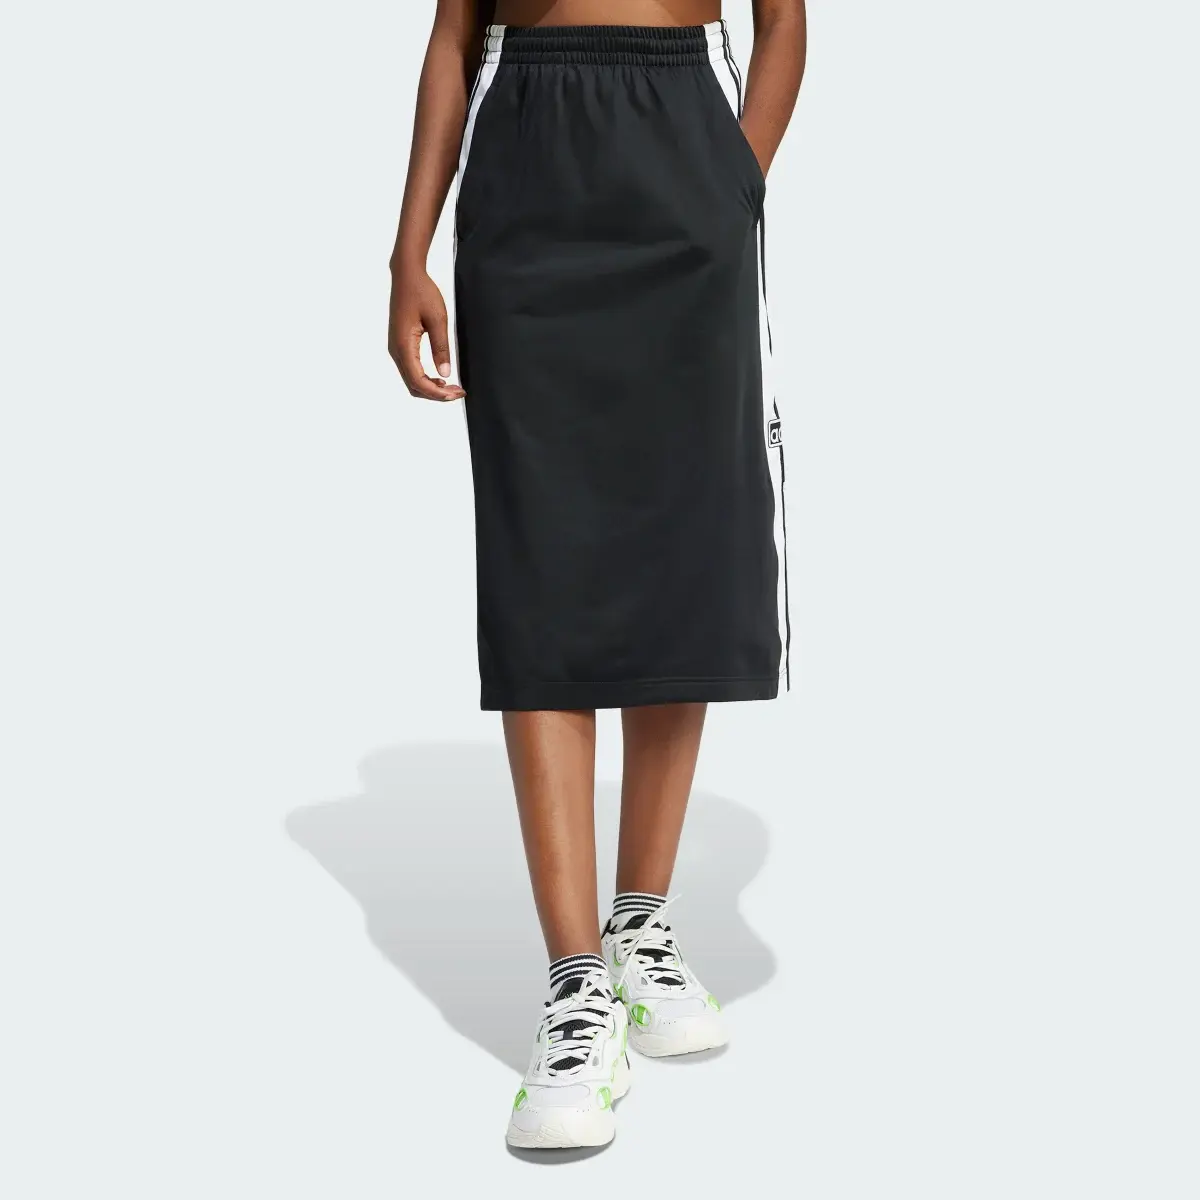 Adidas Adibreak Skirt. 1